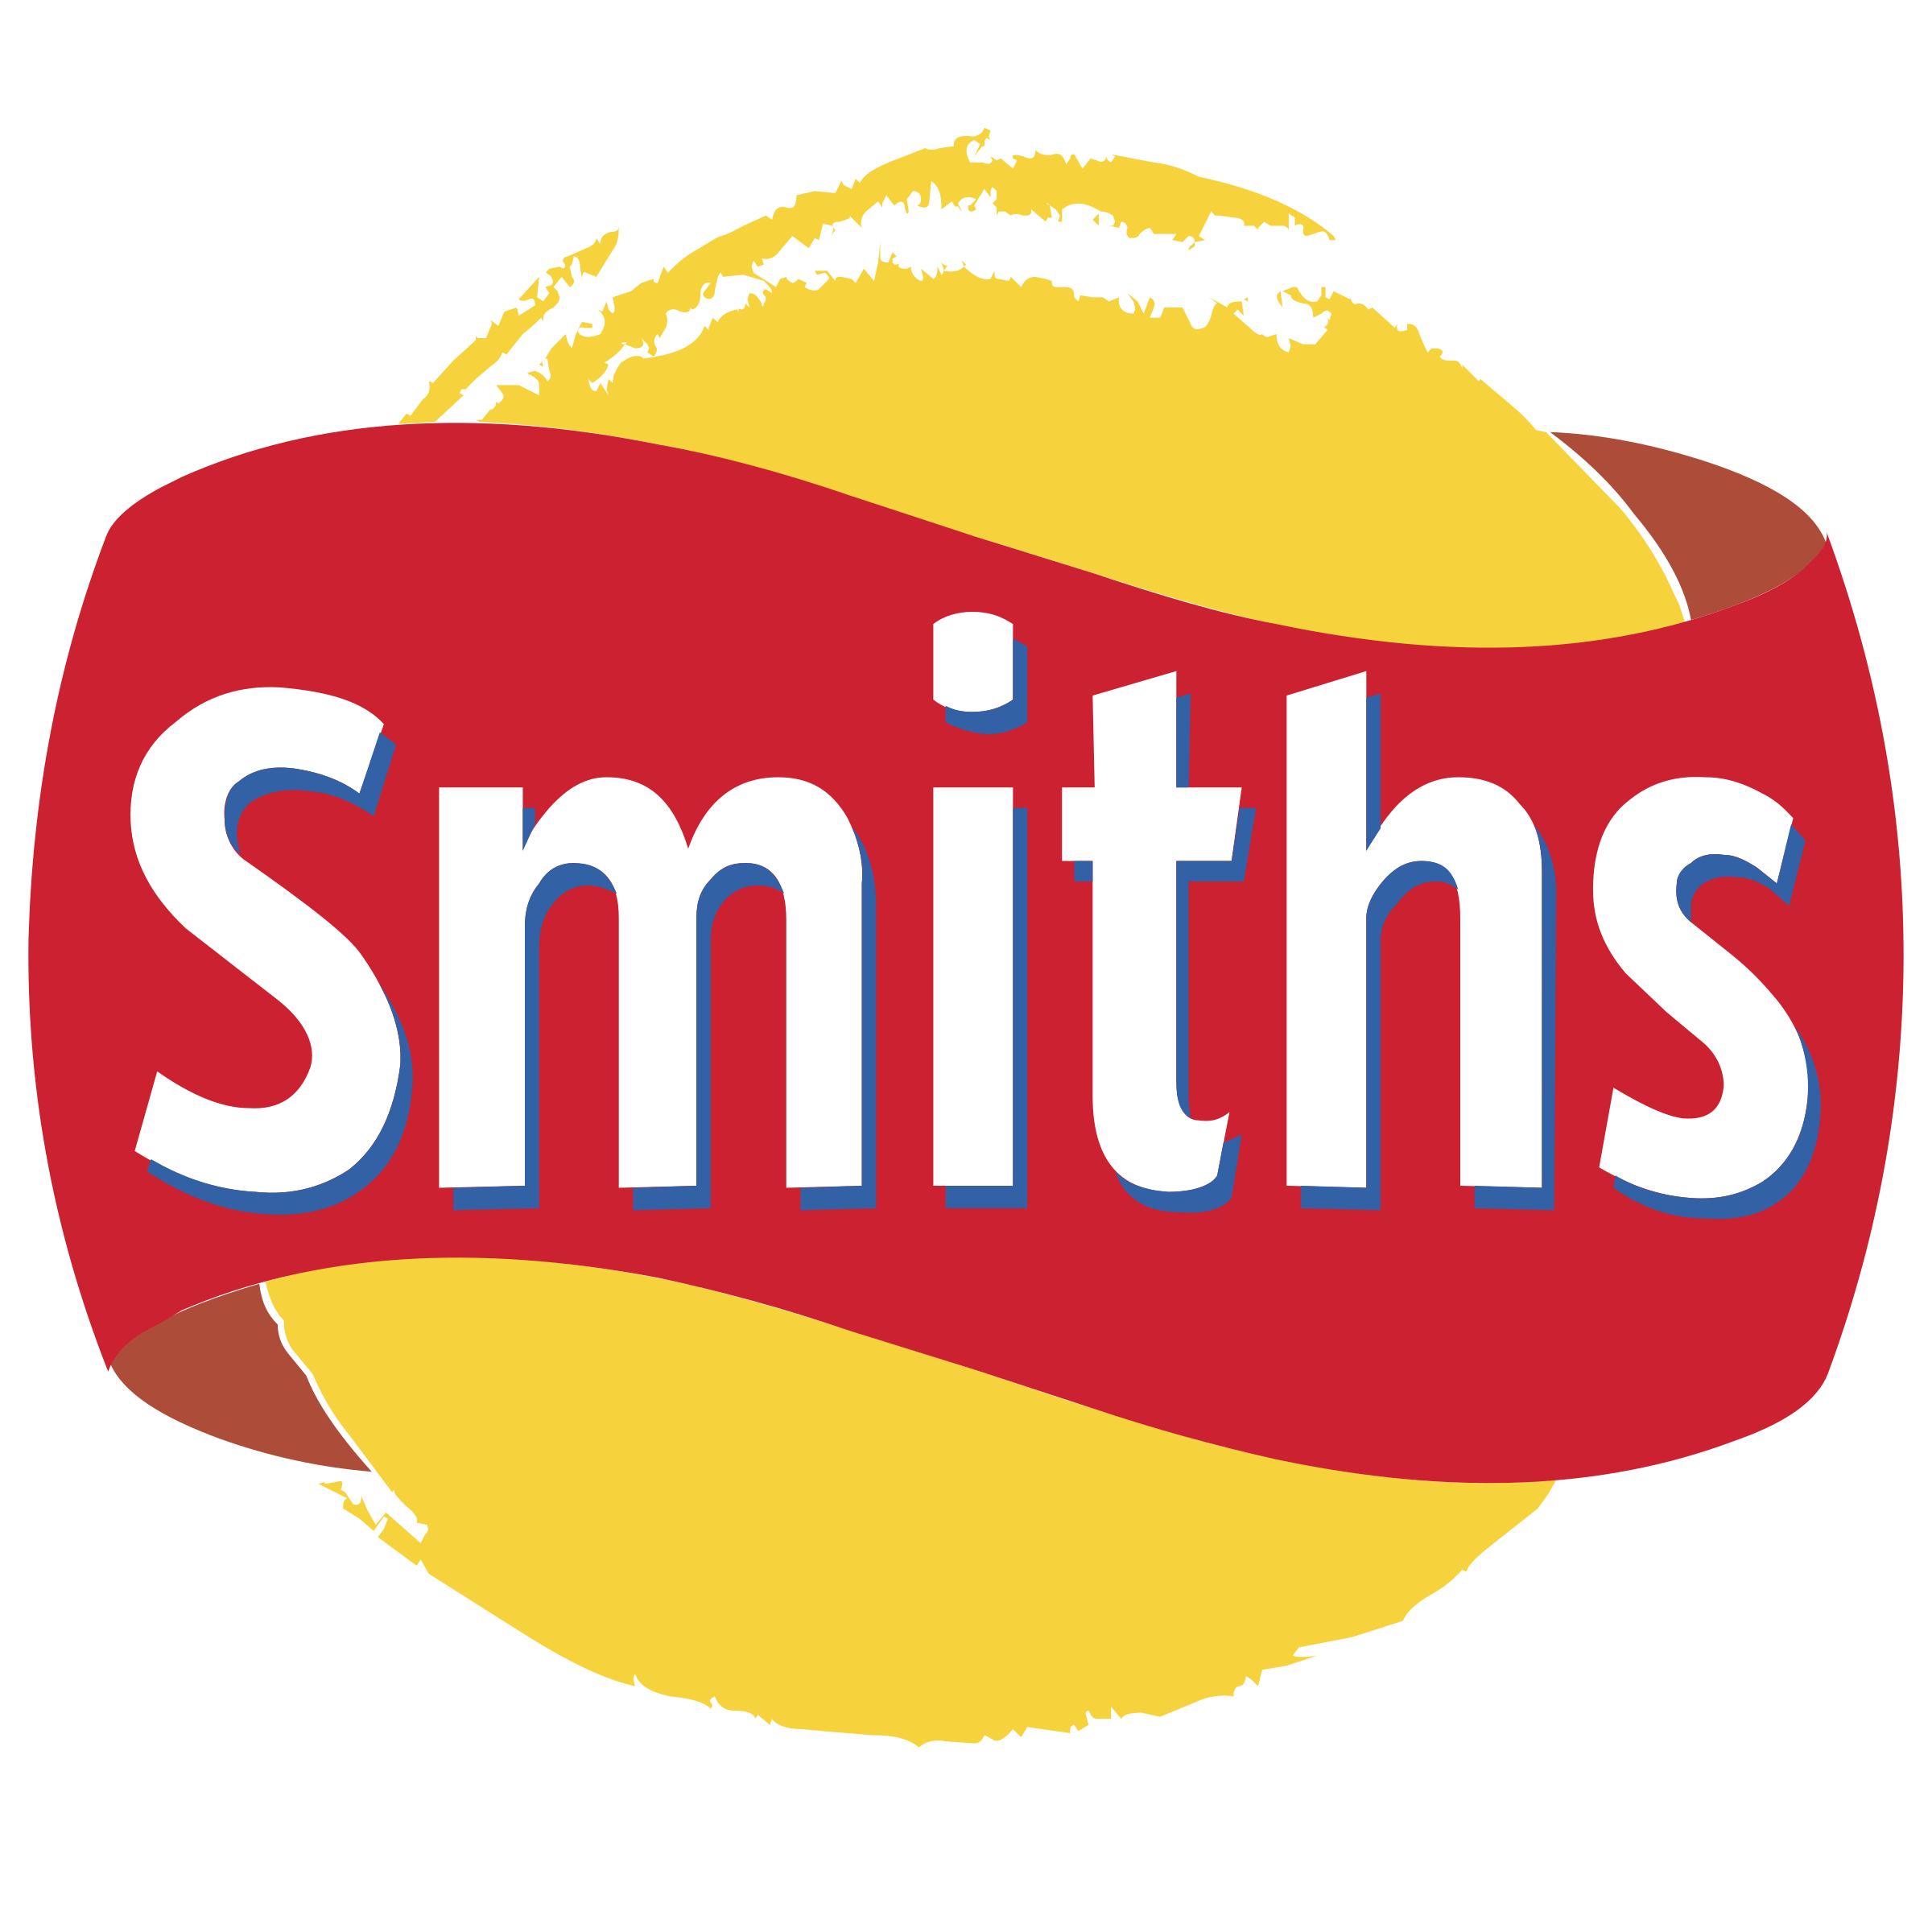 Chips Logo - Smiths Chips Logo PNG Transparent & SVG Vector - Freebie Supply